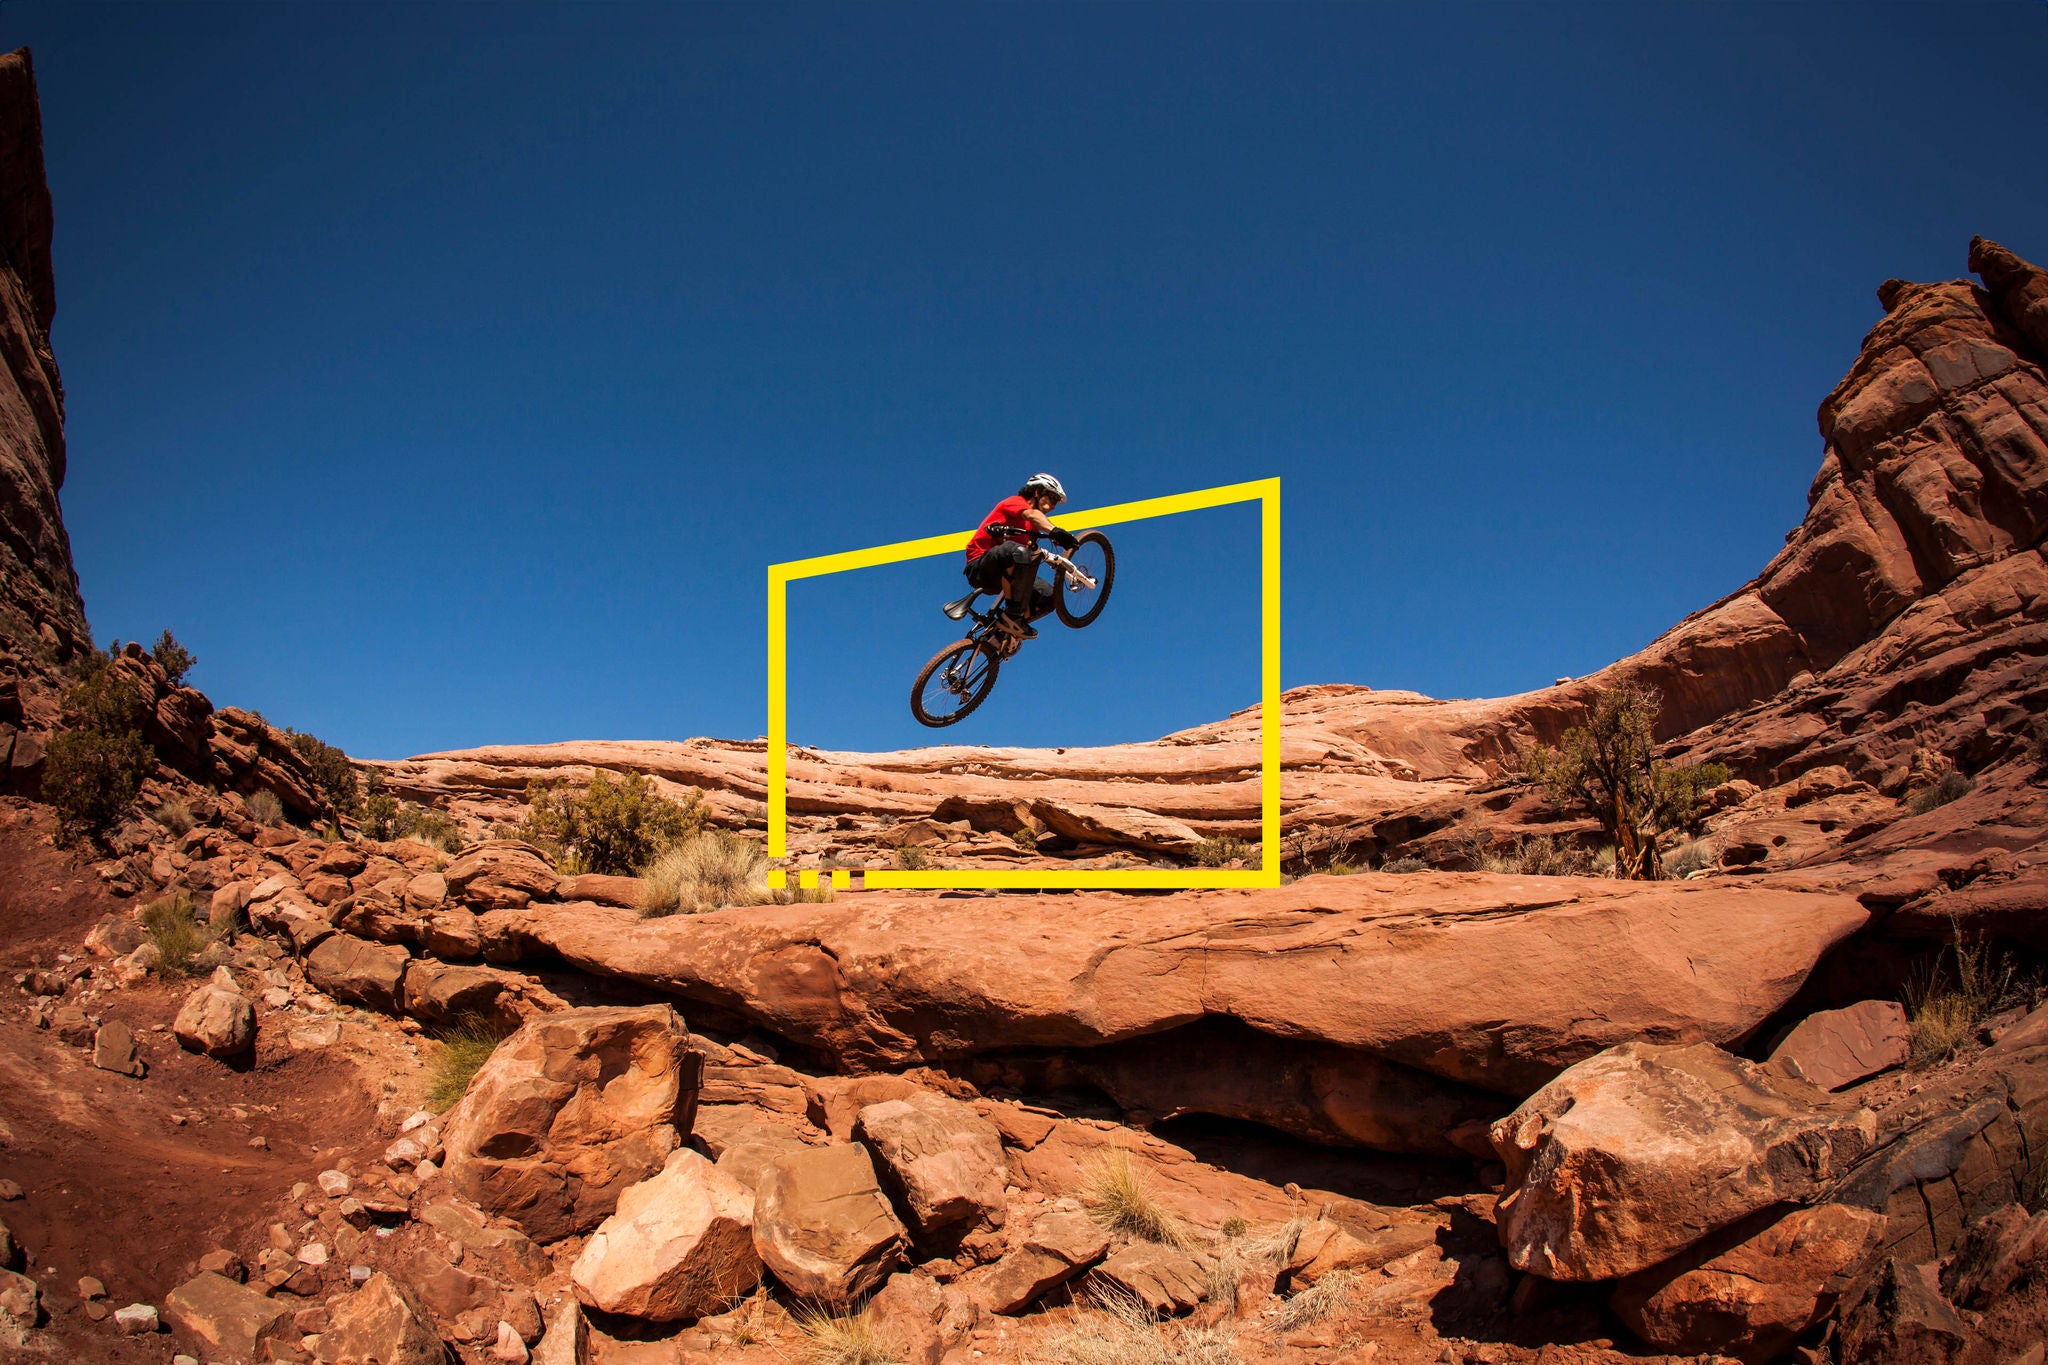 Man getting air on a jump on his mountain bike near Moab Utah static no zoom